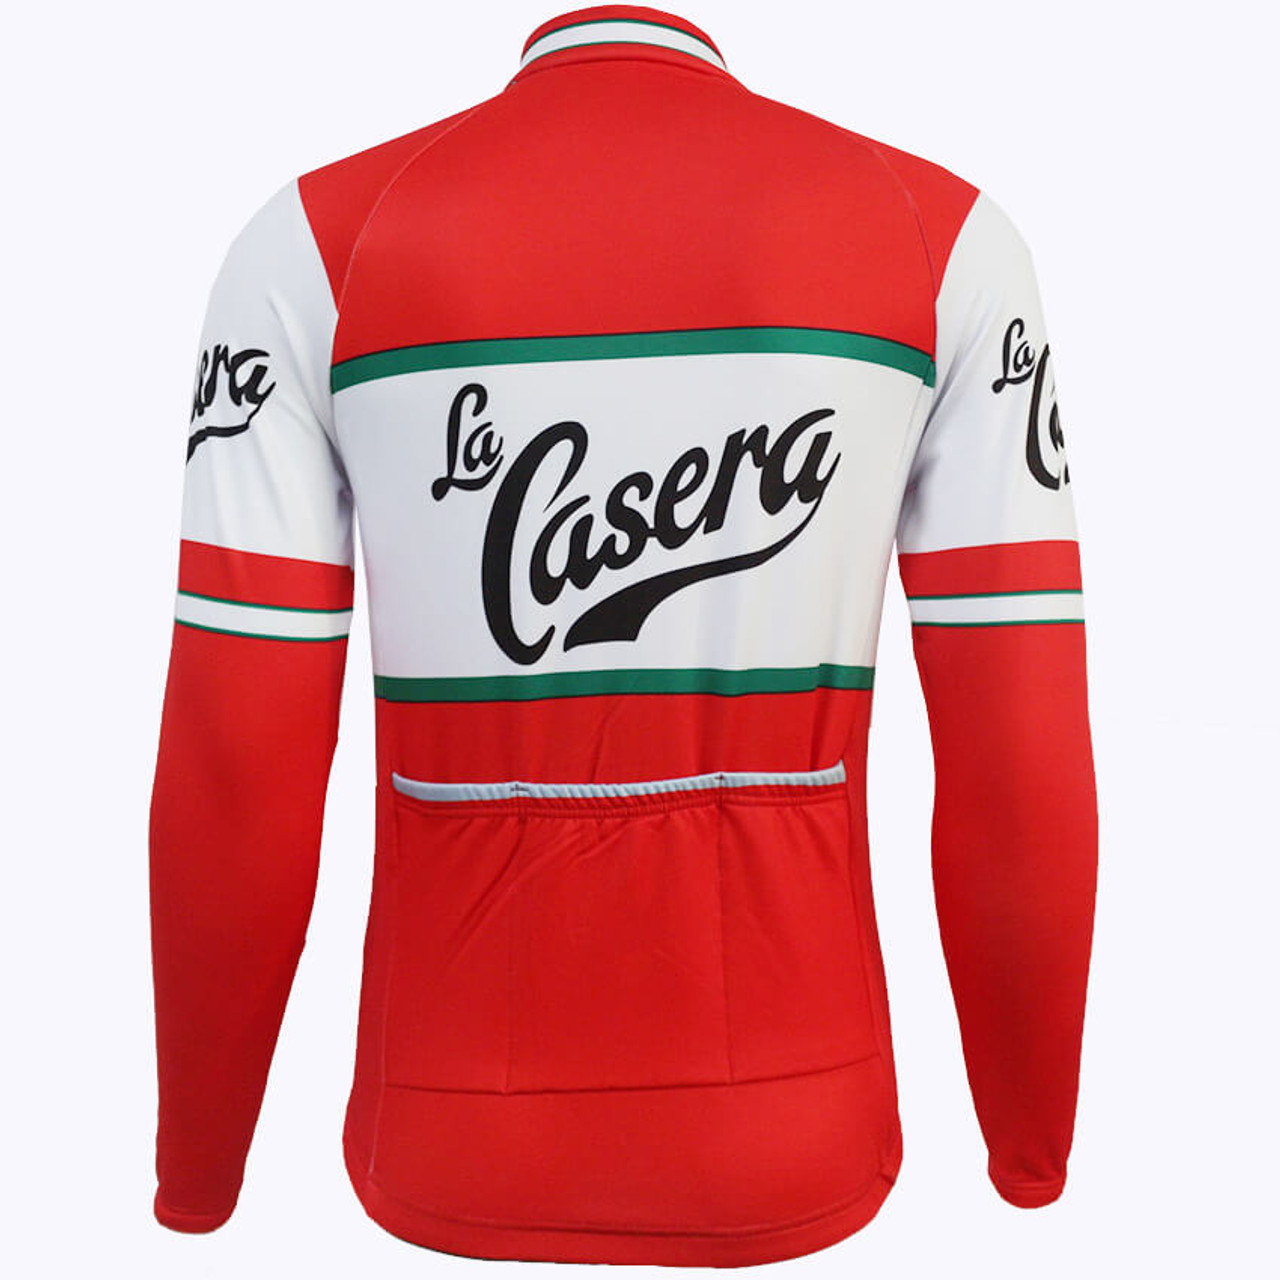 La Casera Bahamontes Team Mens Cycling Jerseys | Freestylecycling.com